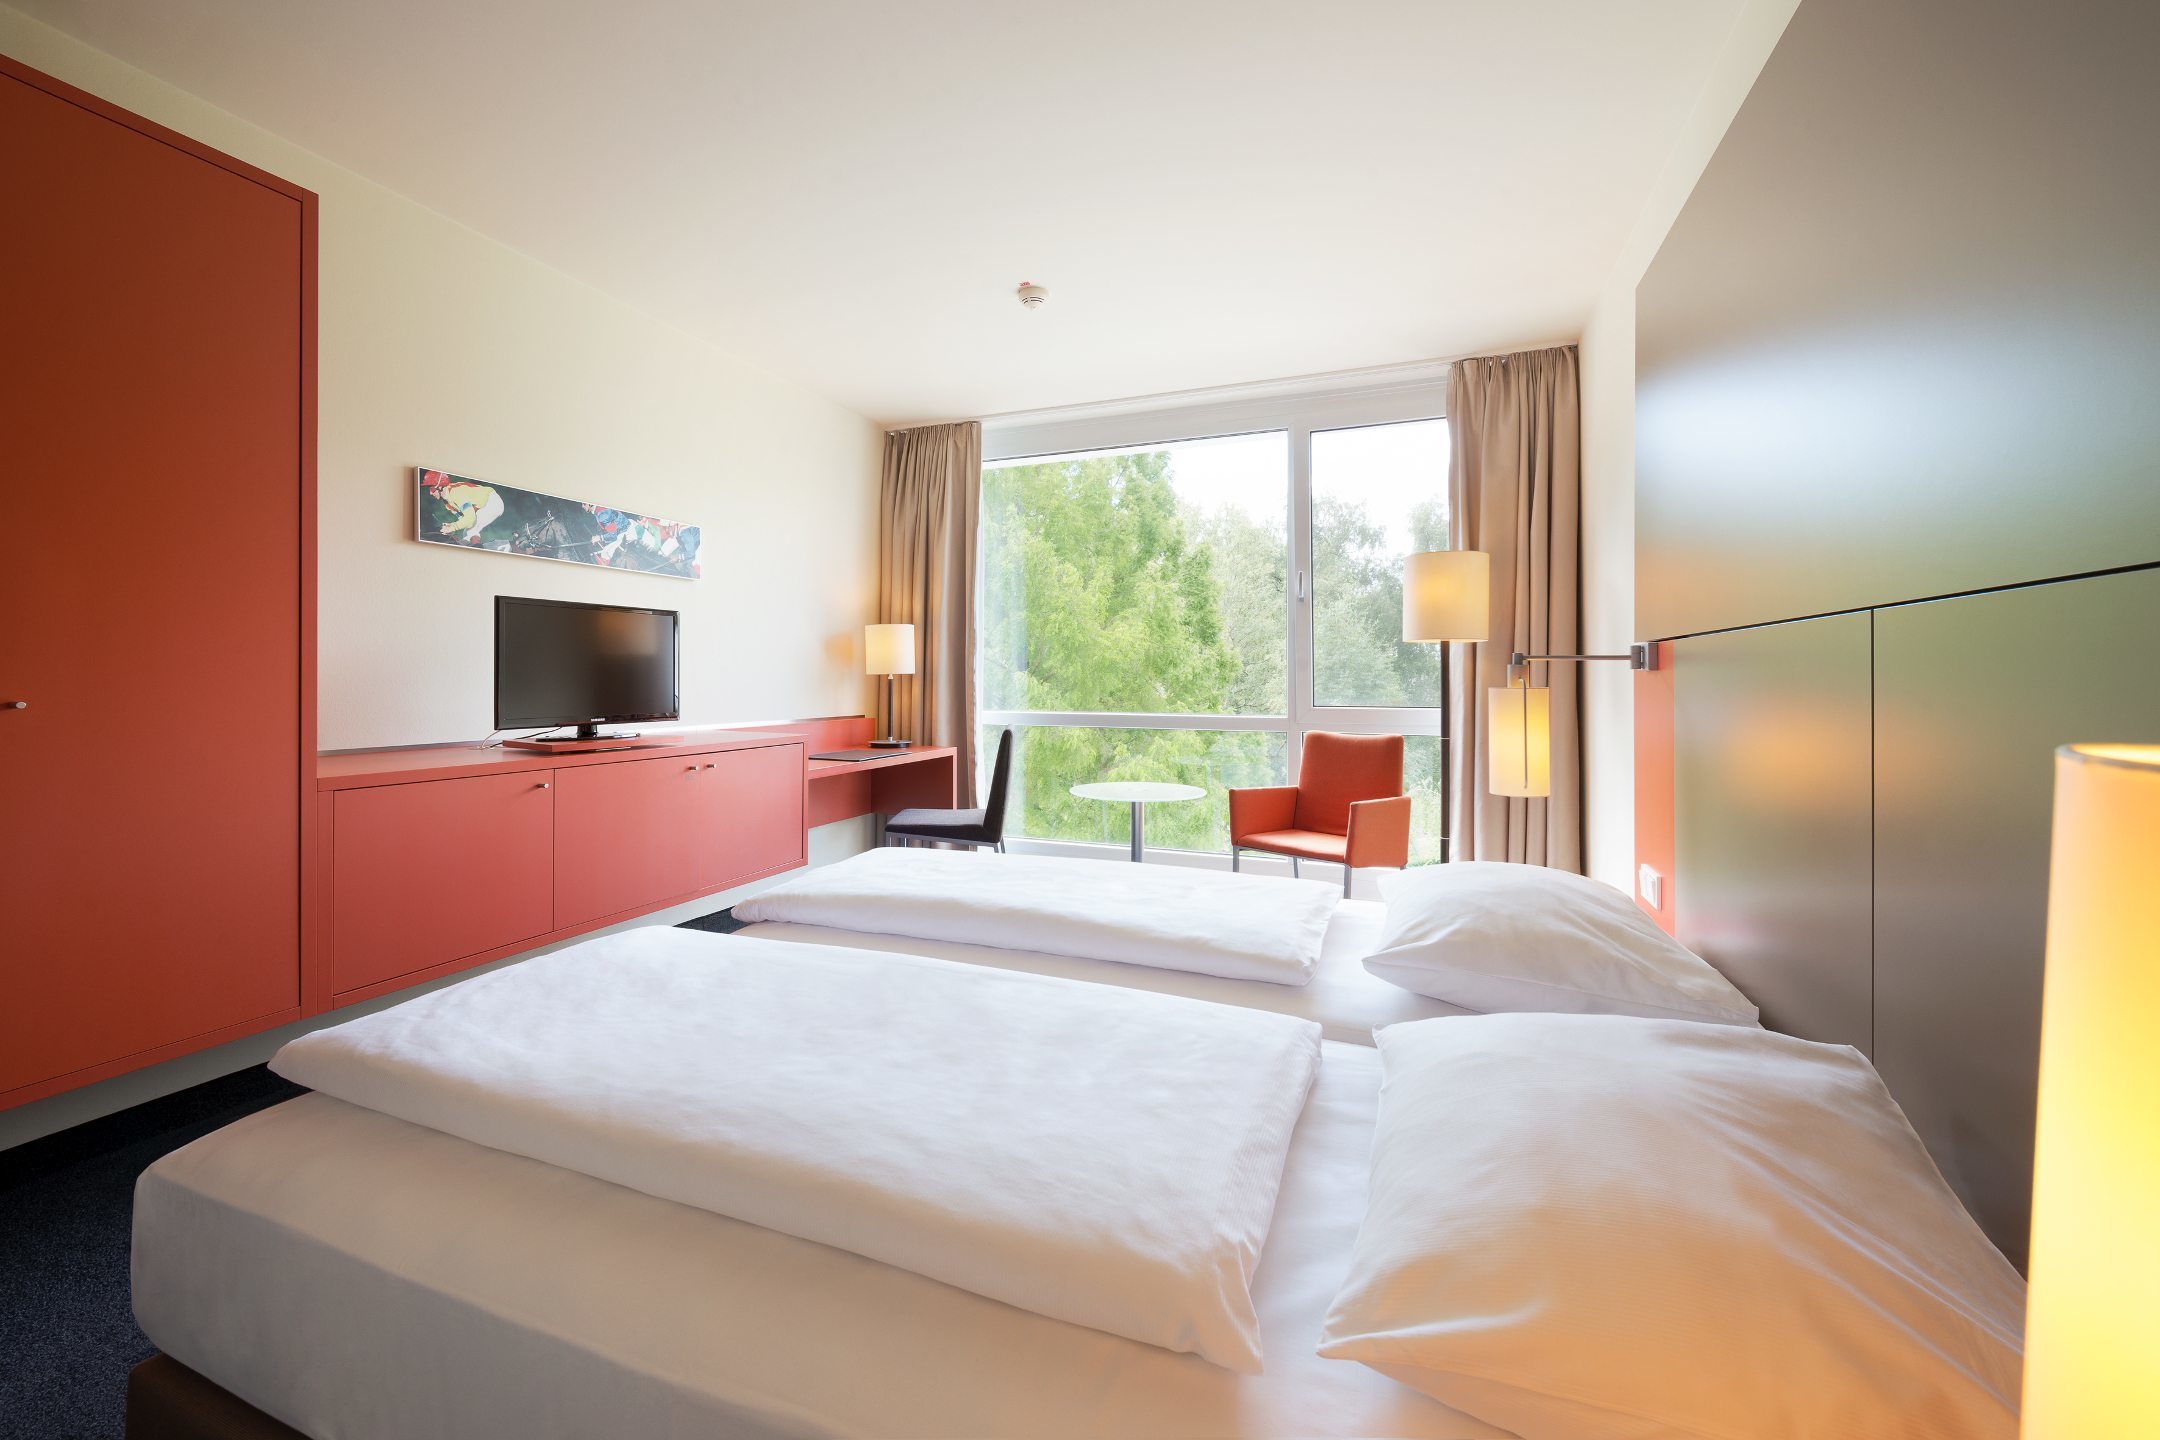 Innenansicht des Economy Doppelzimmer im ATLANTIC Hotel Galopprennbahn in Bremen